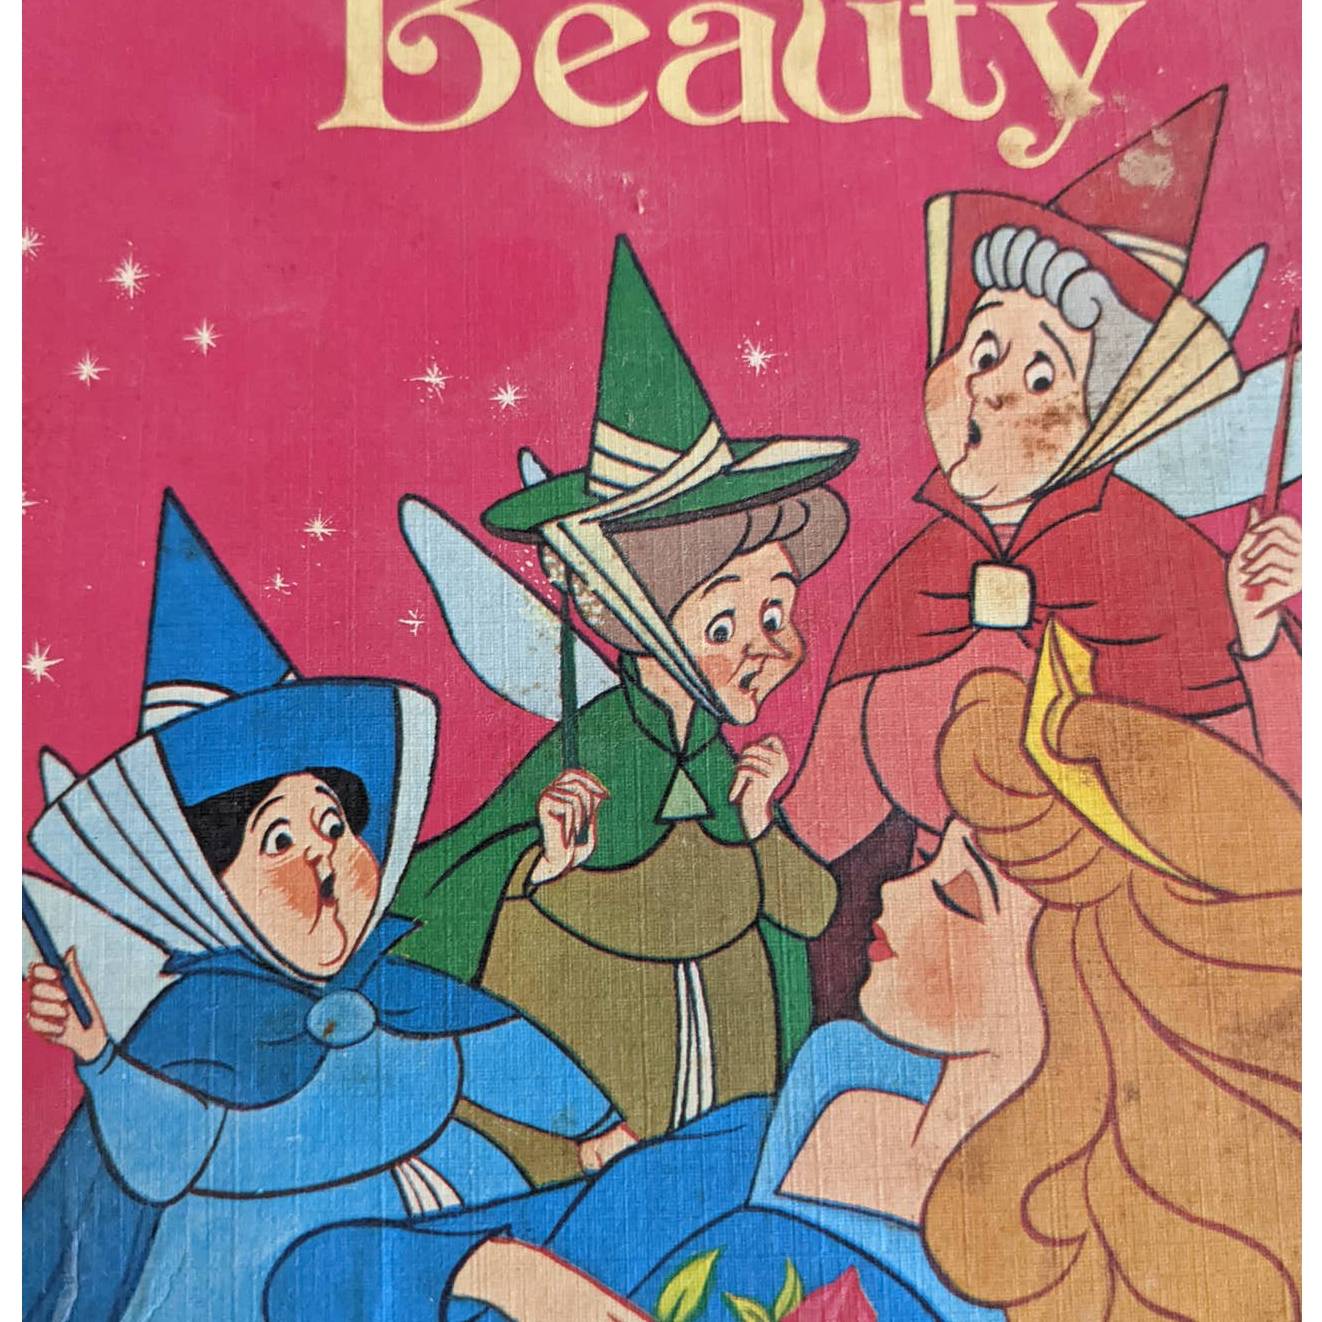 Disney Books / Walt Disney / Sleeping Beauty / Donald Duck 